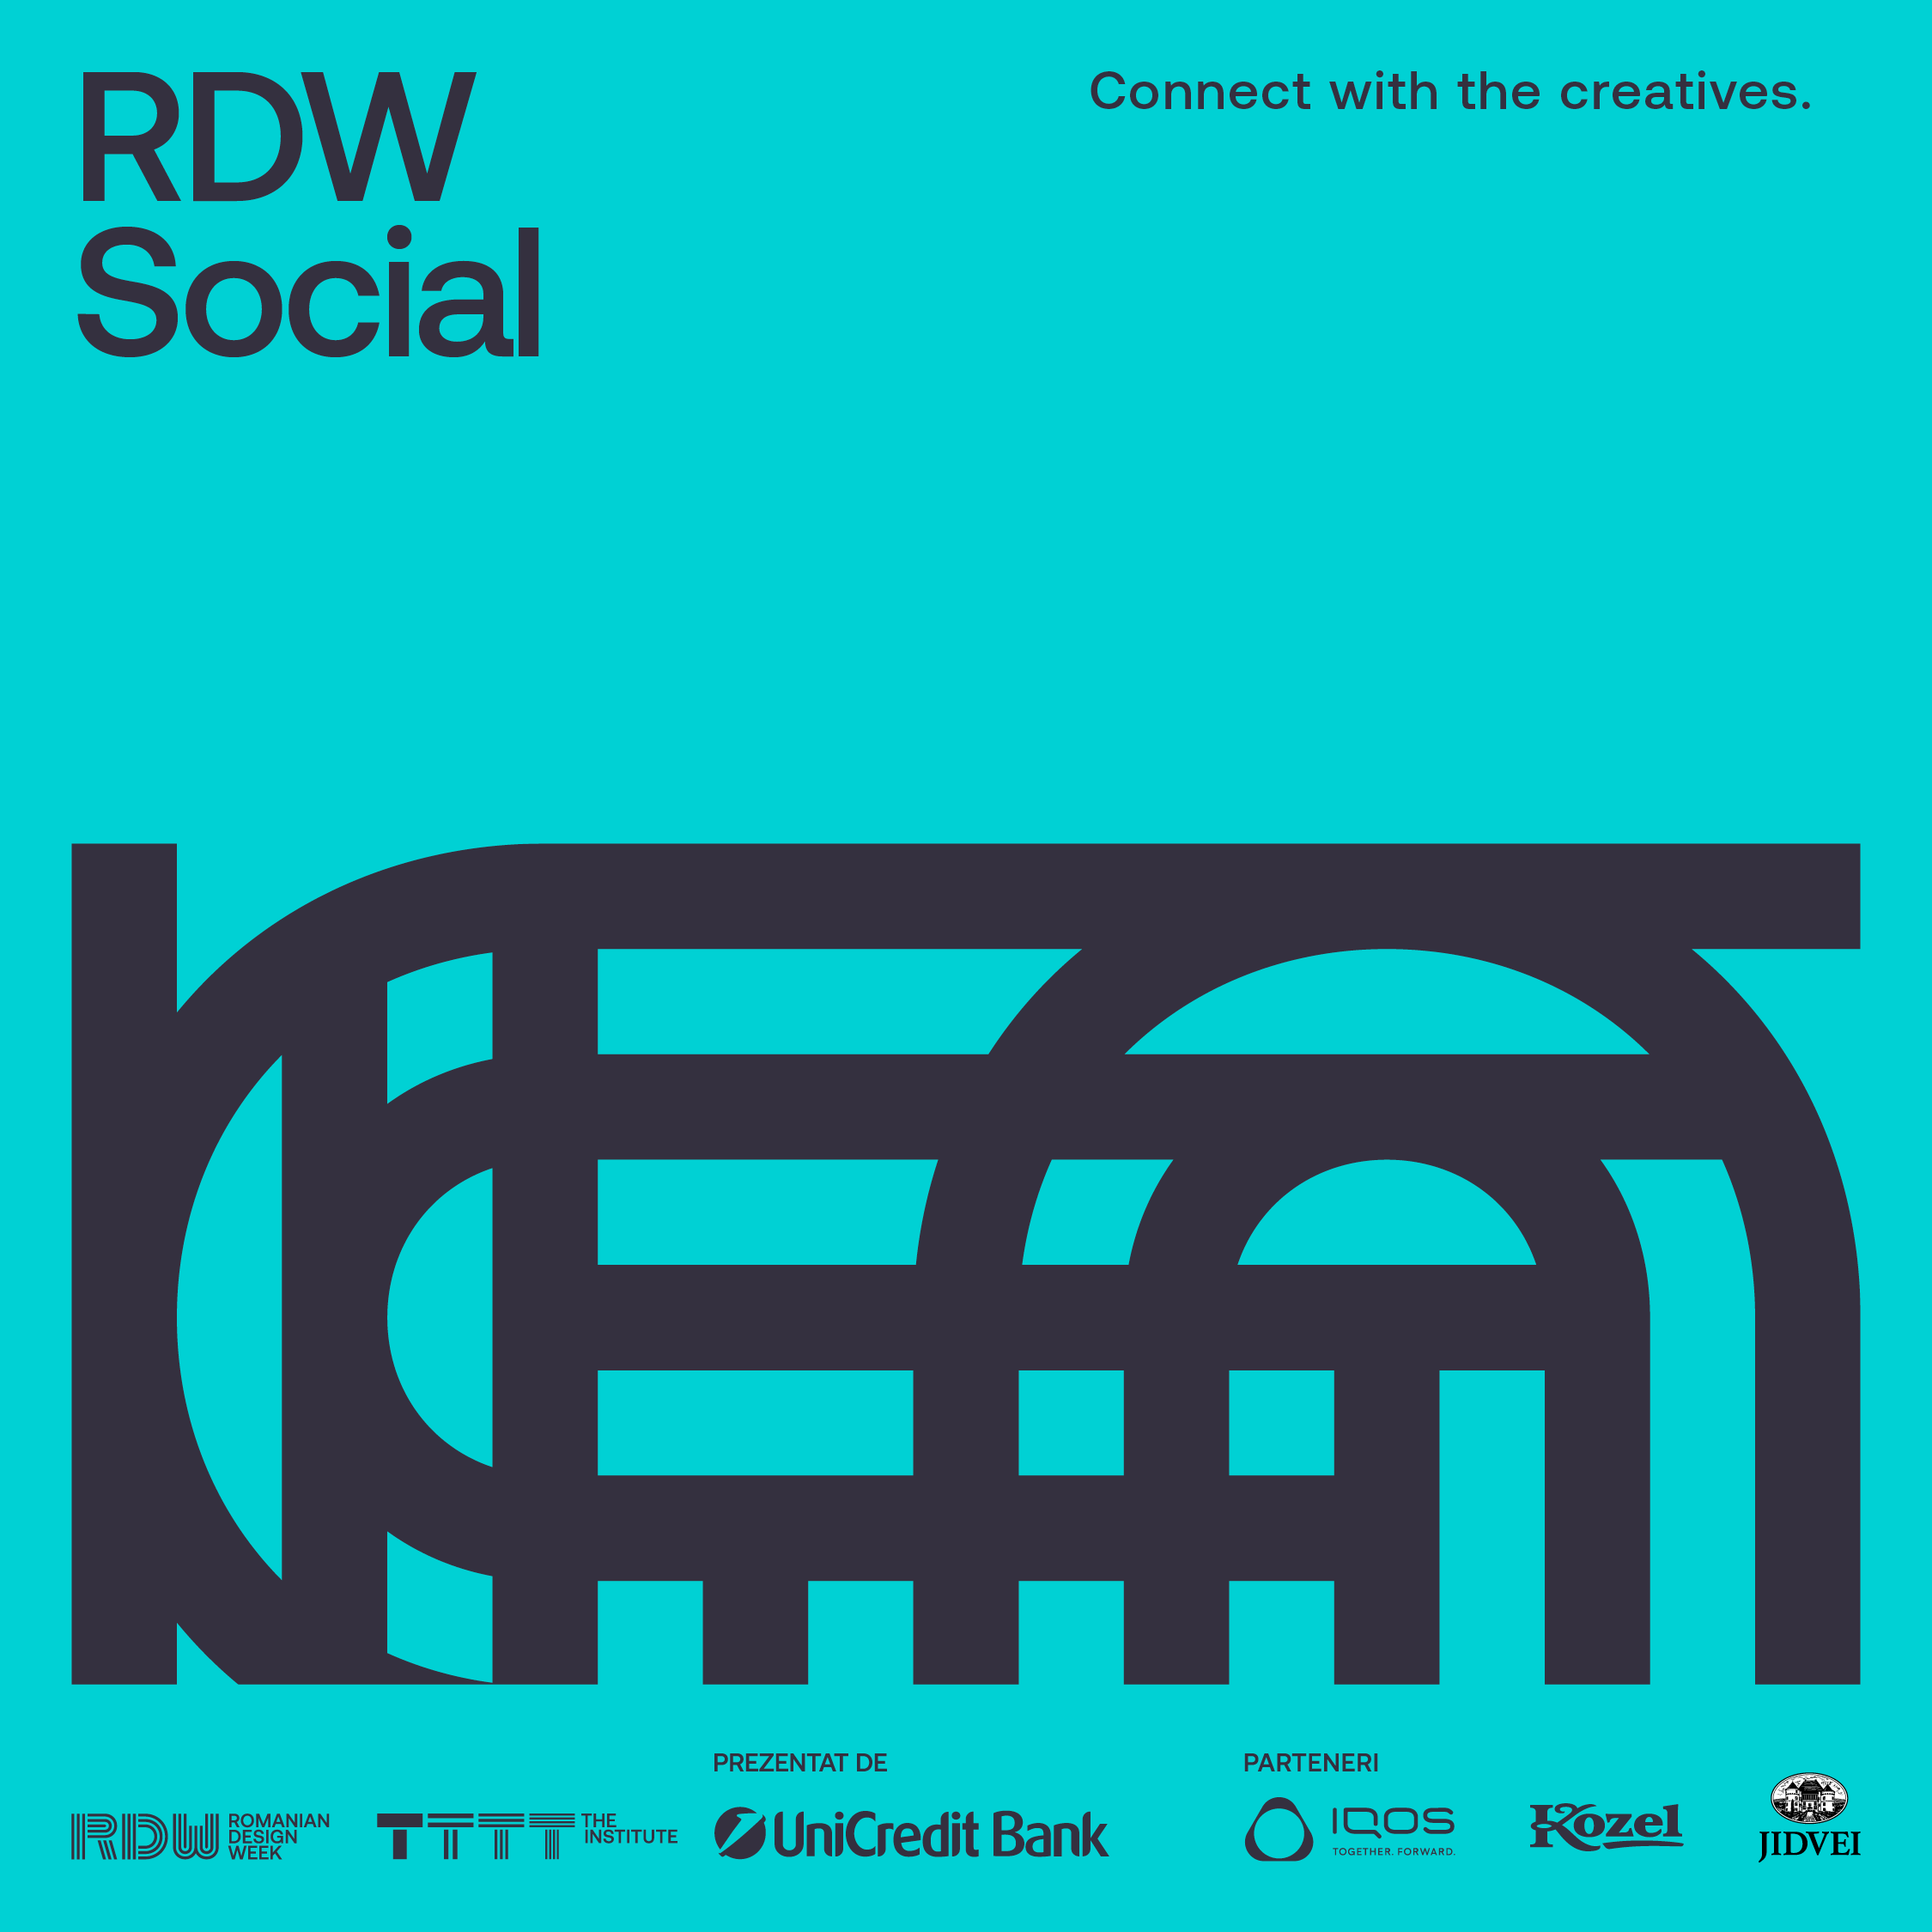 RDw social